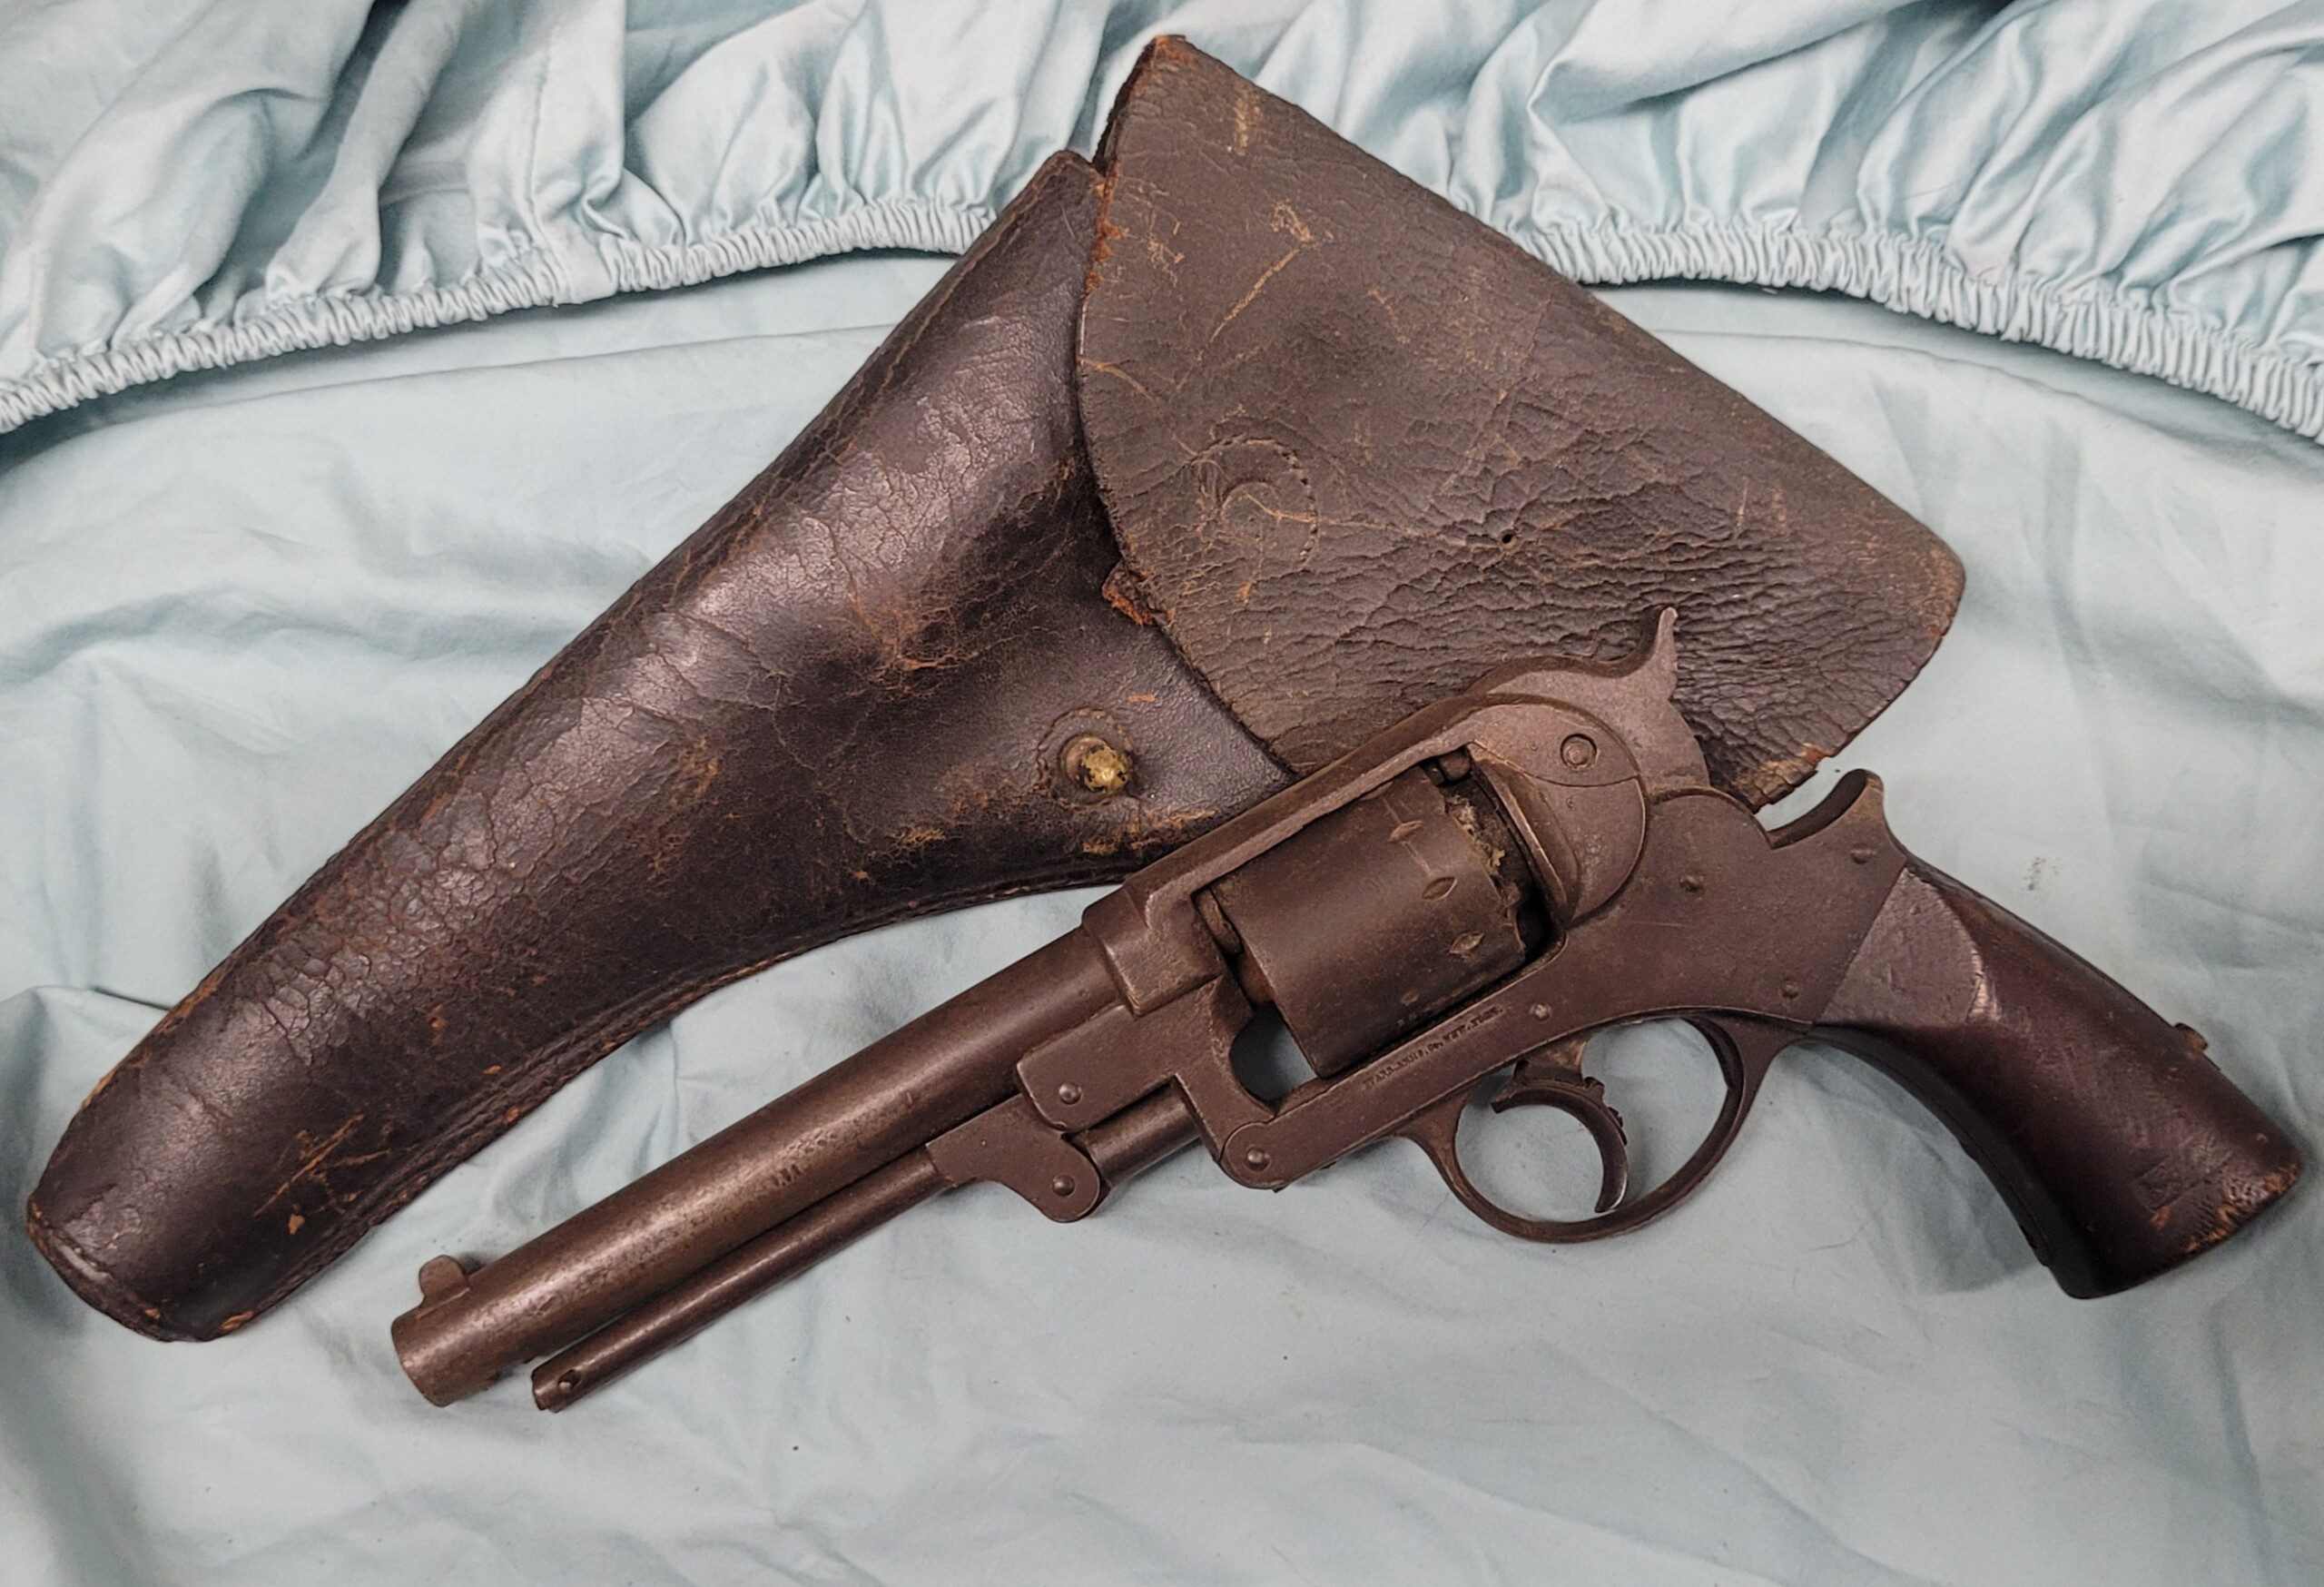 Ambrose Antique Guns, Antique Firearms, Guns, Firearms, Antique Weapons,  Antique Arms & Antique Armor, Antique Armour--Powder Horns and Flasks